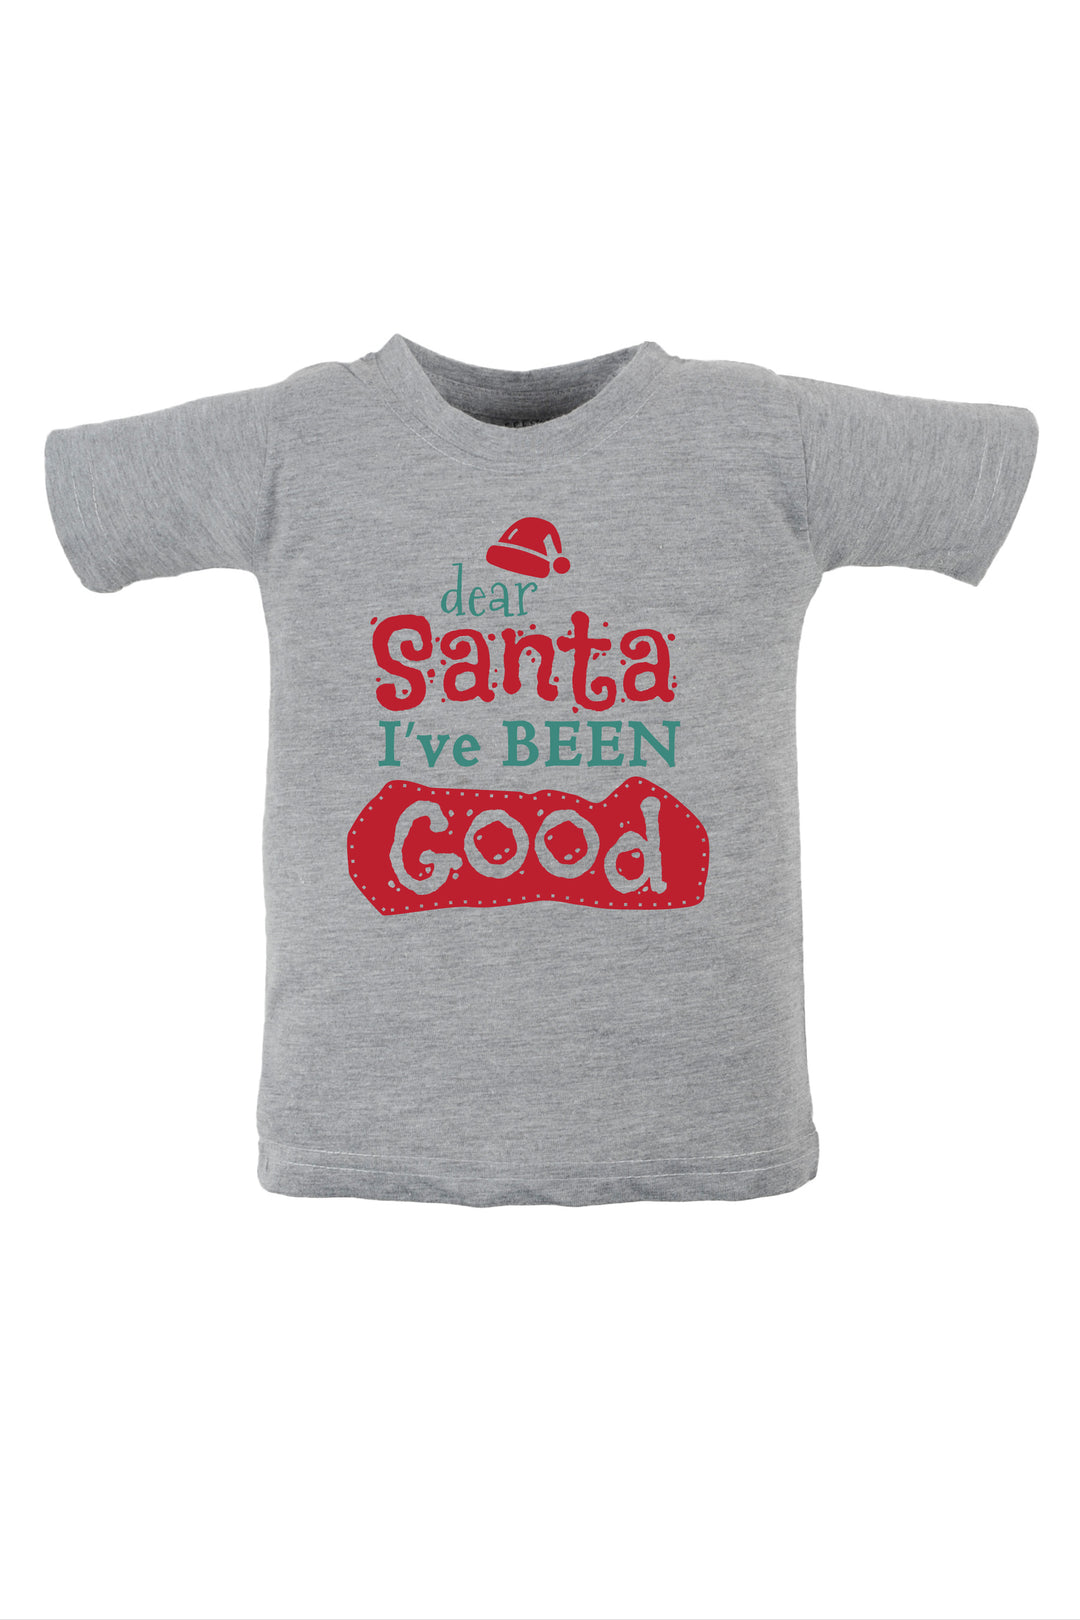 Dear Santa I've Been Good Kids T Shirt